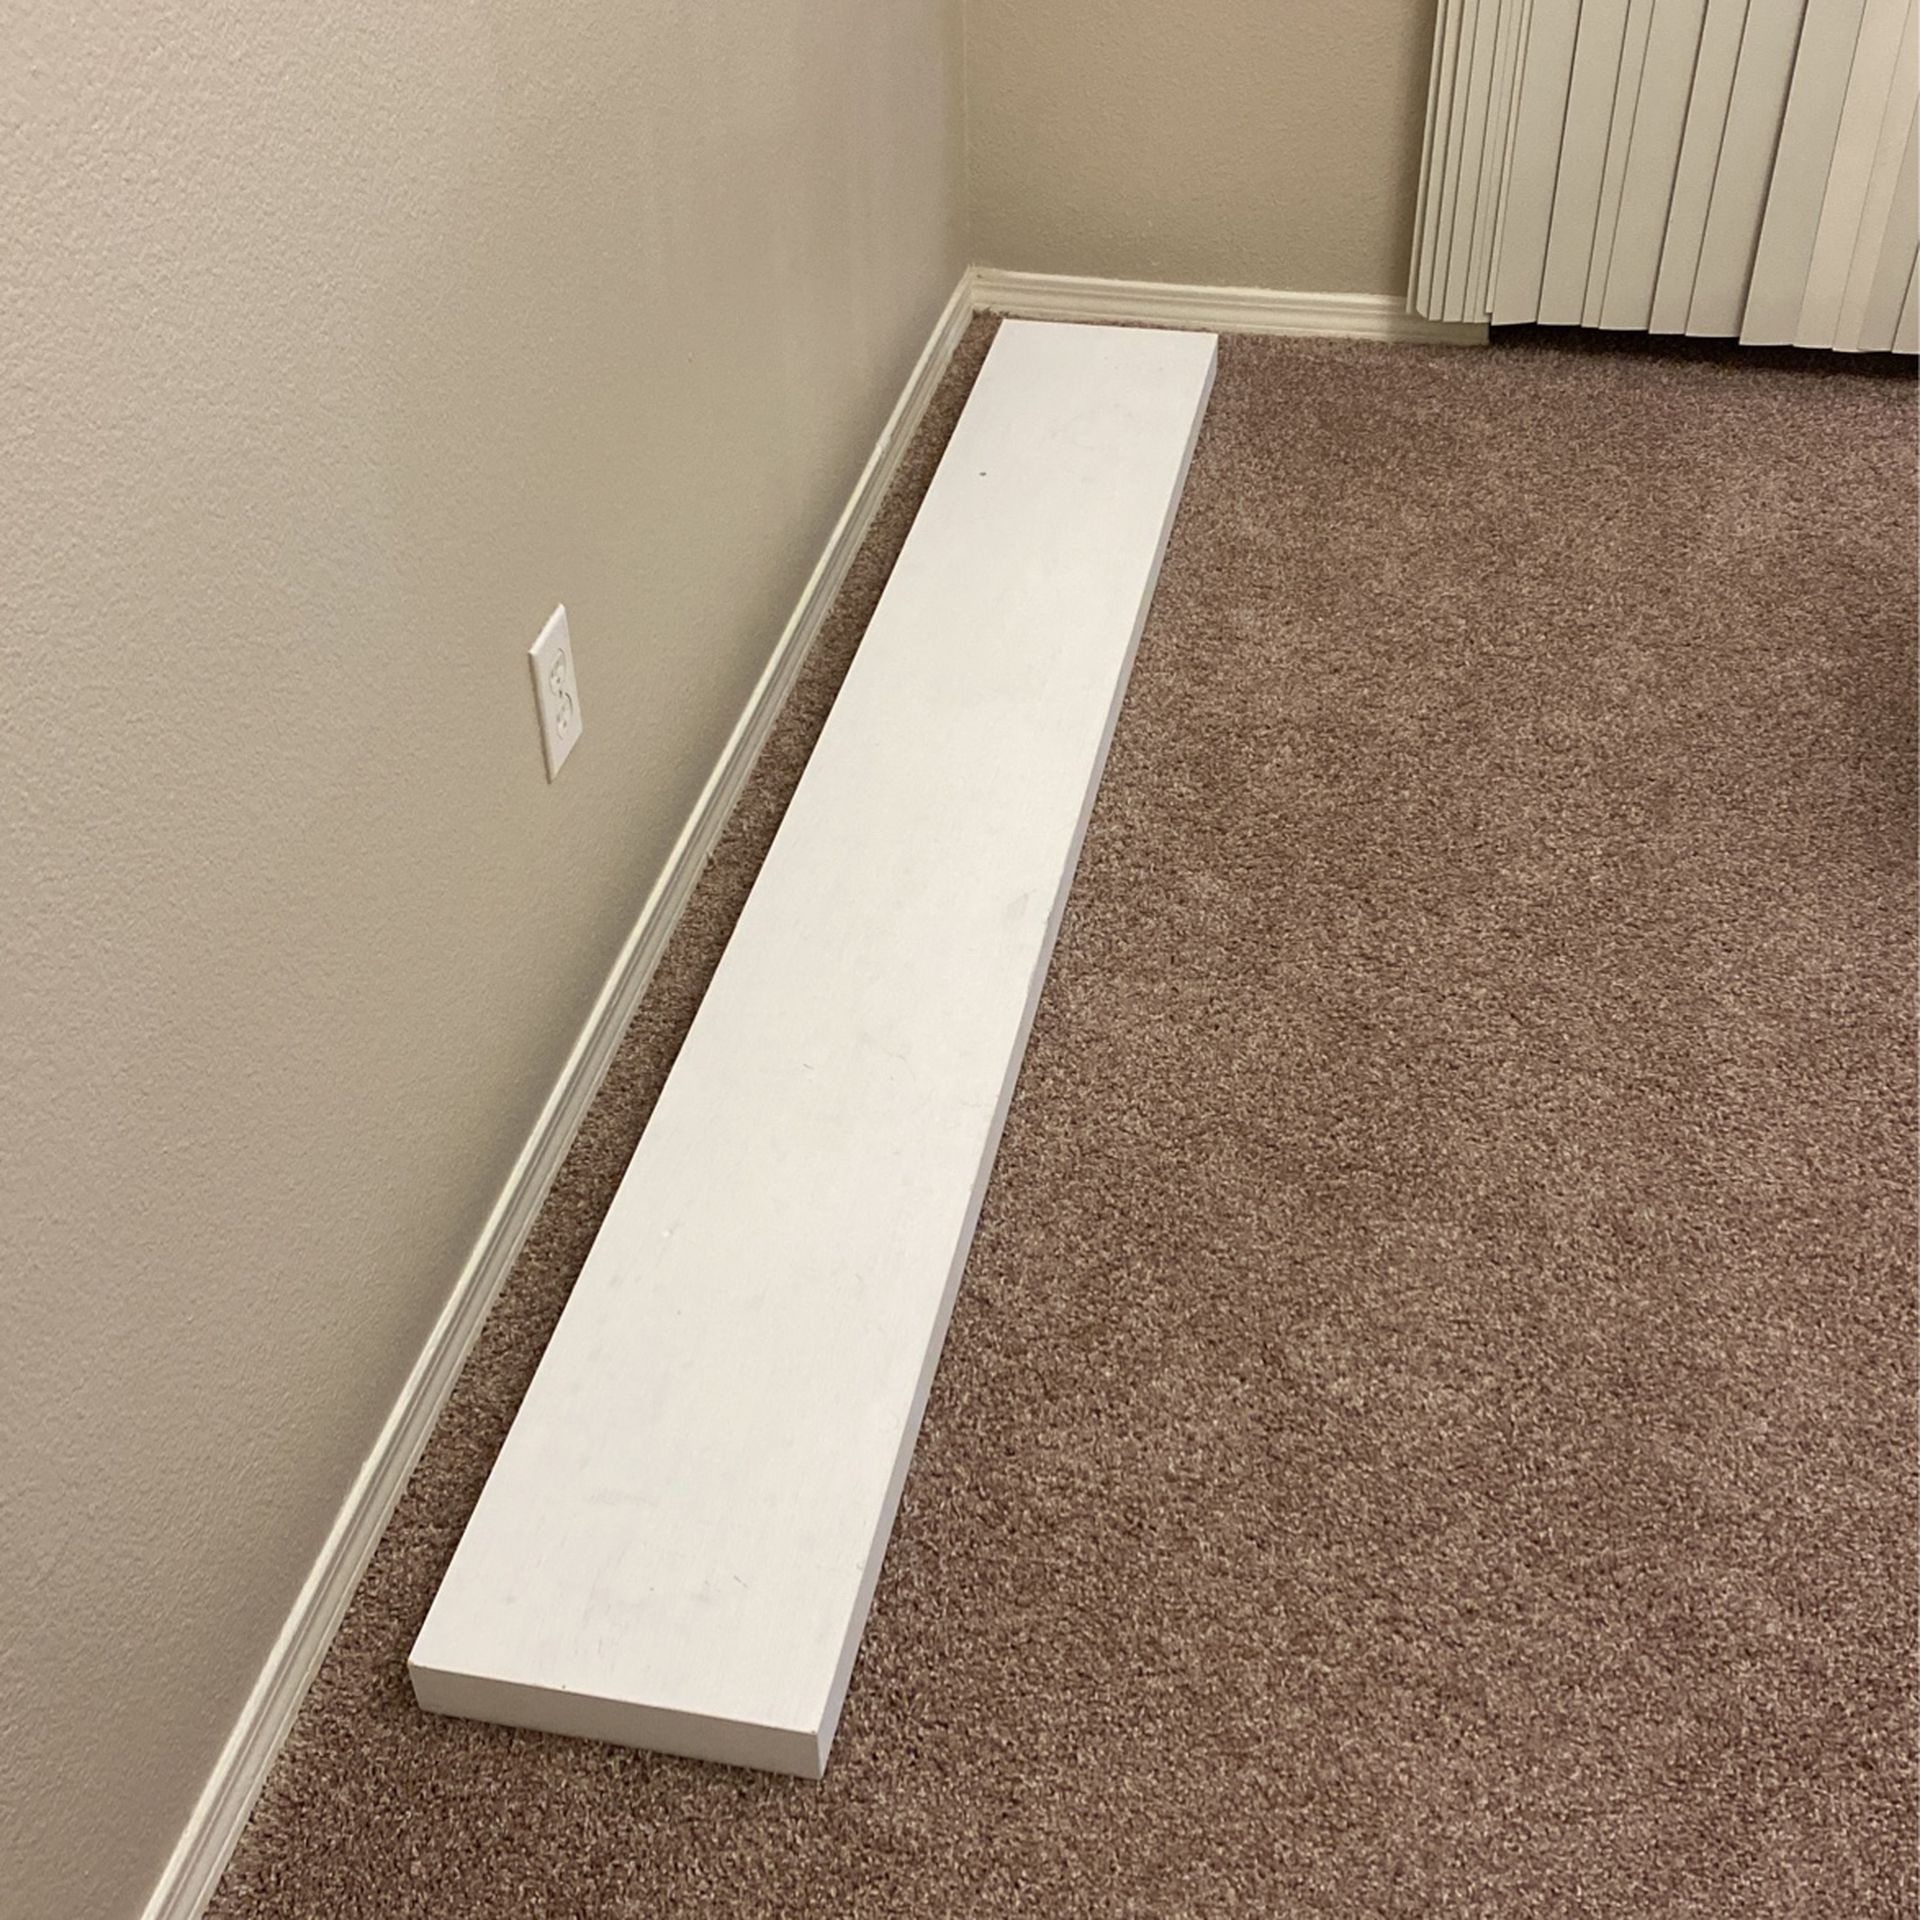 White Wall Shelf  IKEA